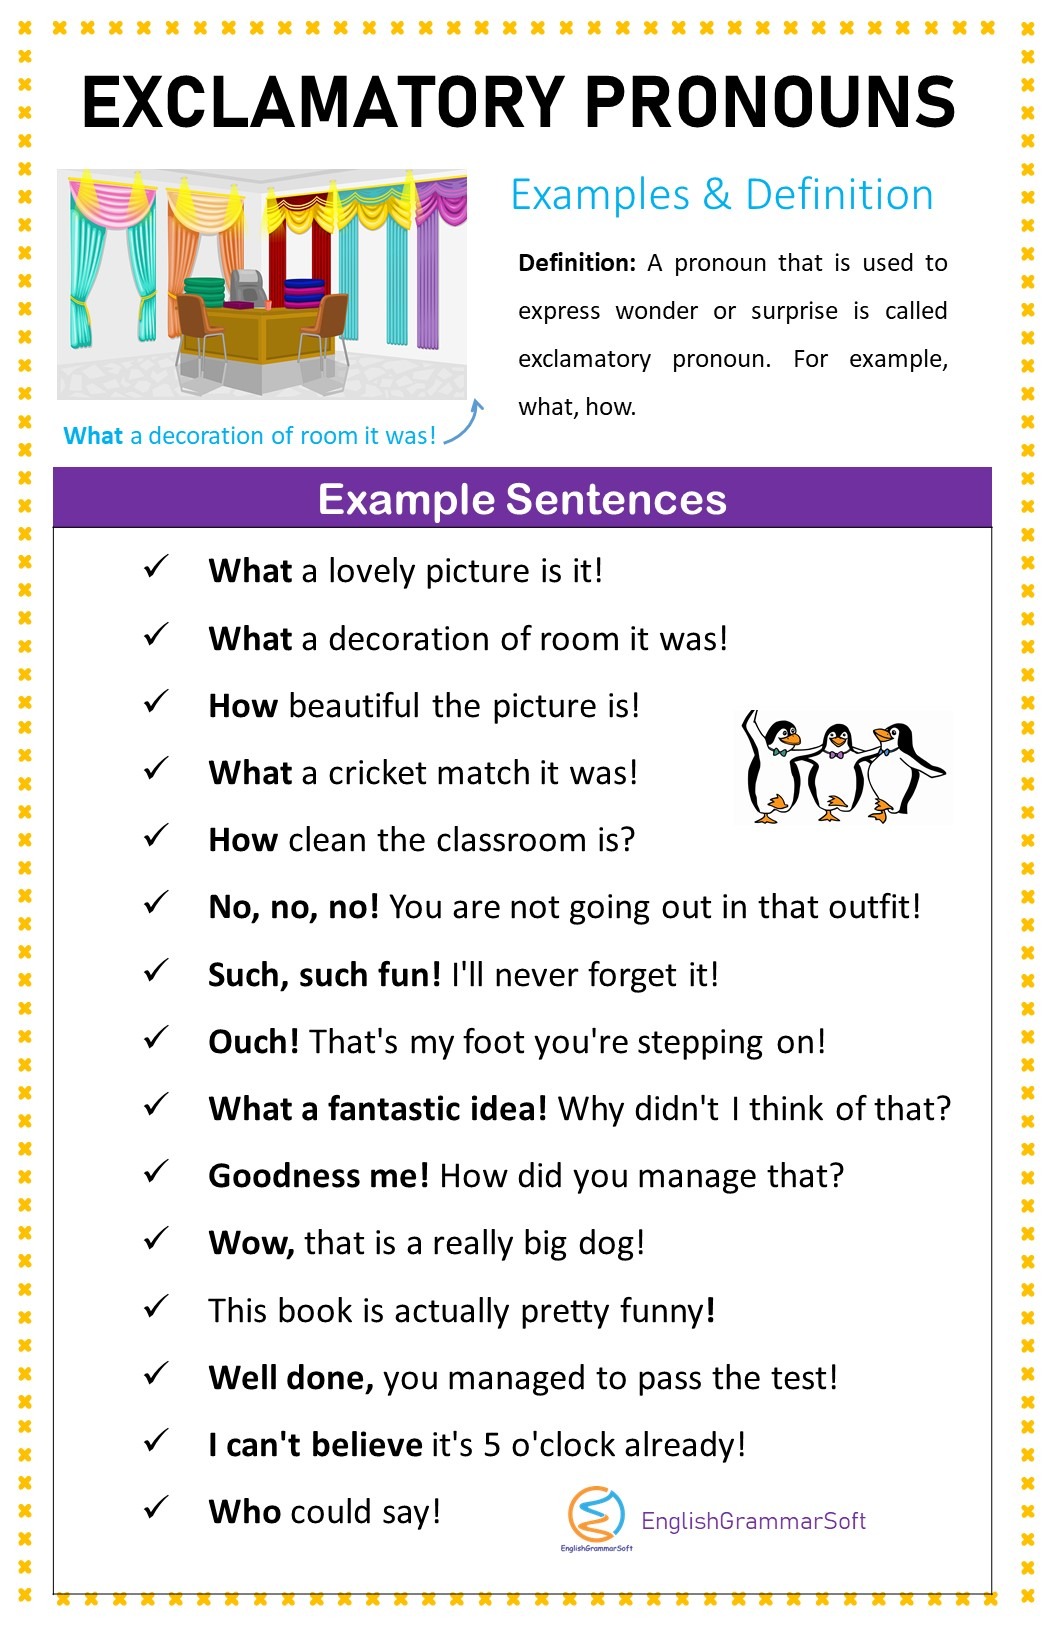 Exclamatory Pronouns (Example Sentences & Definition)